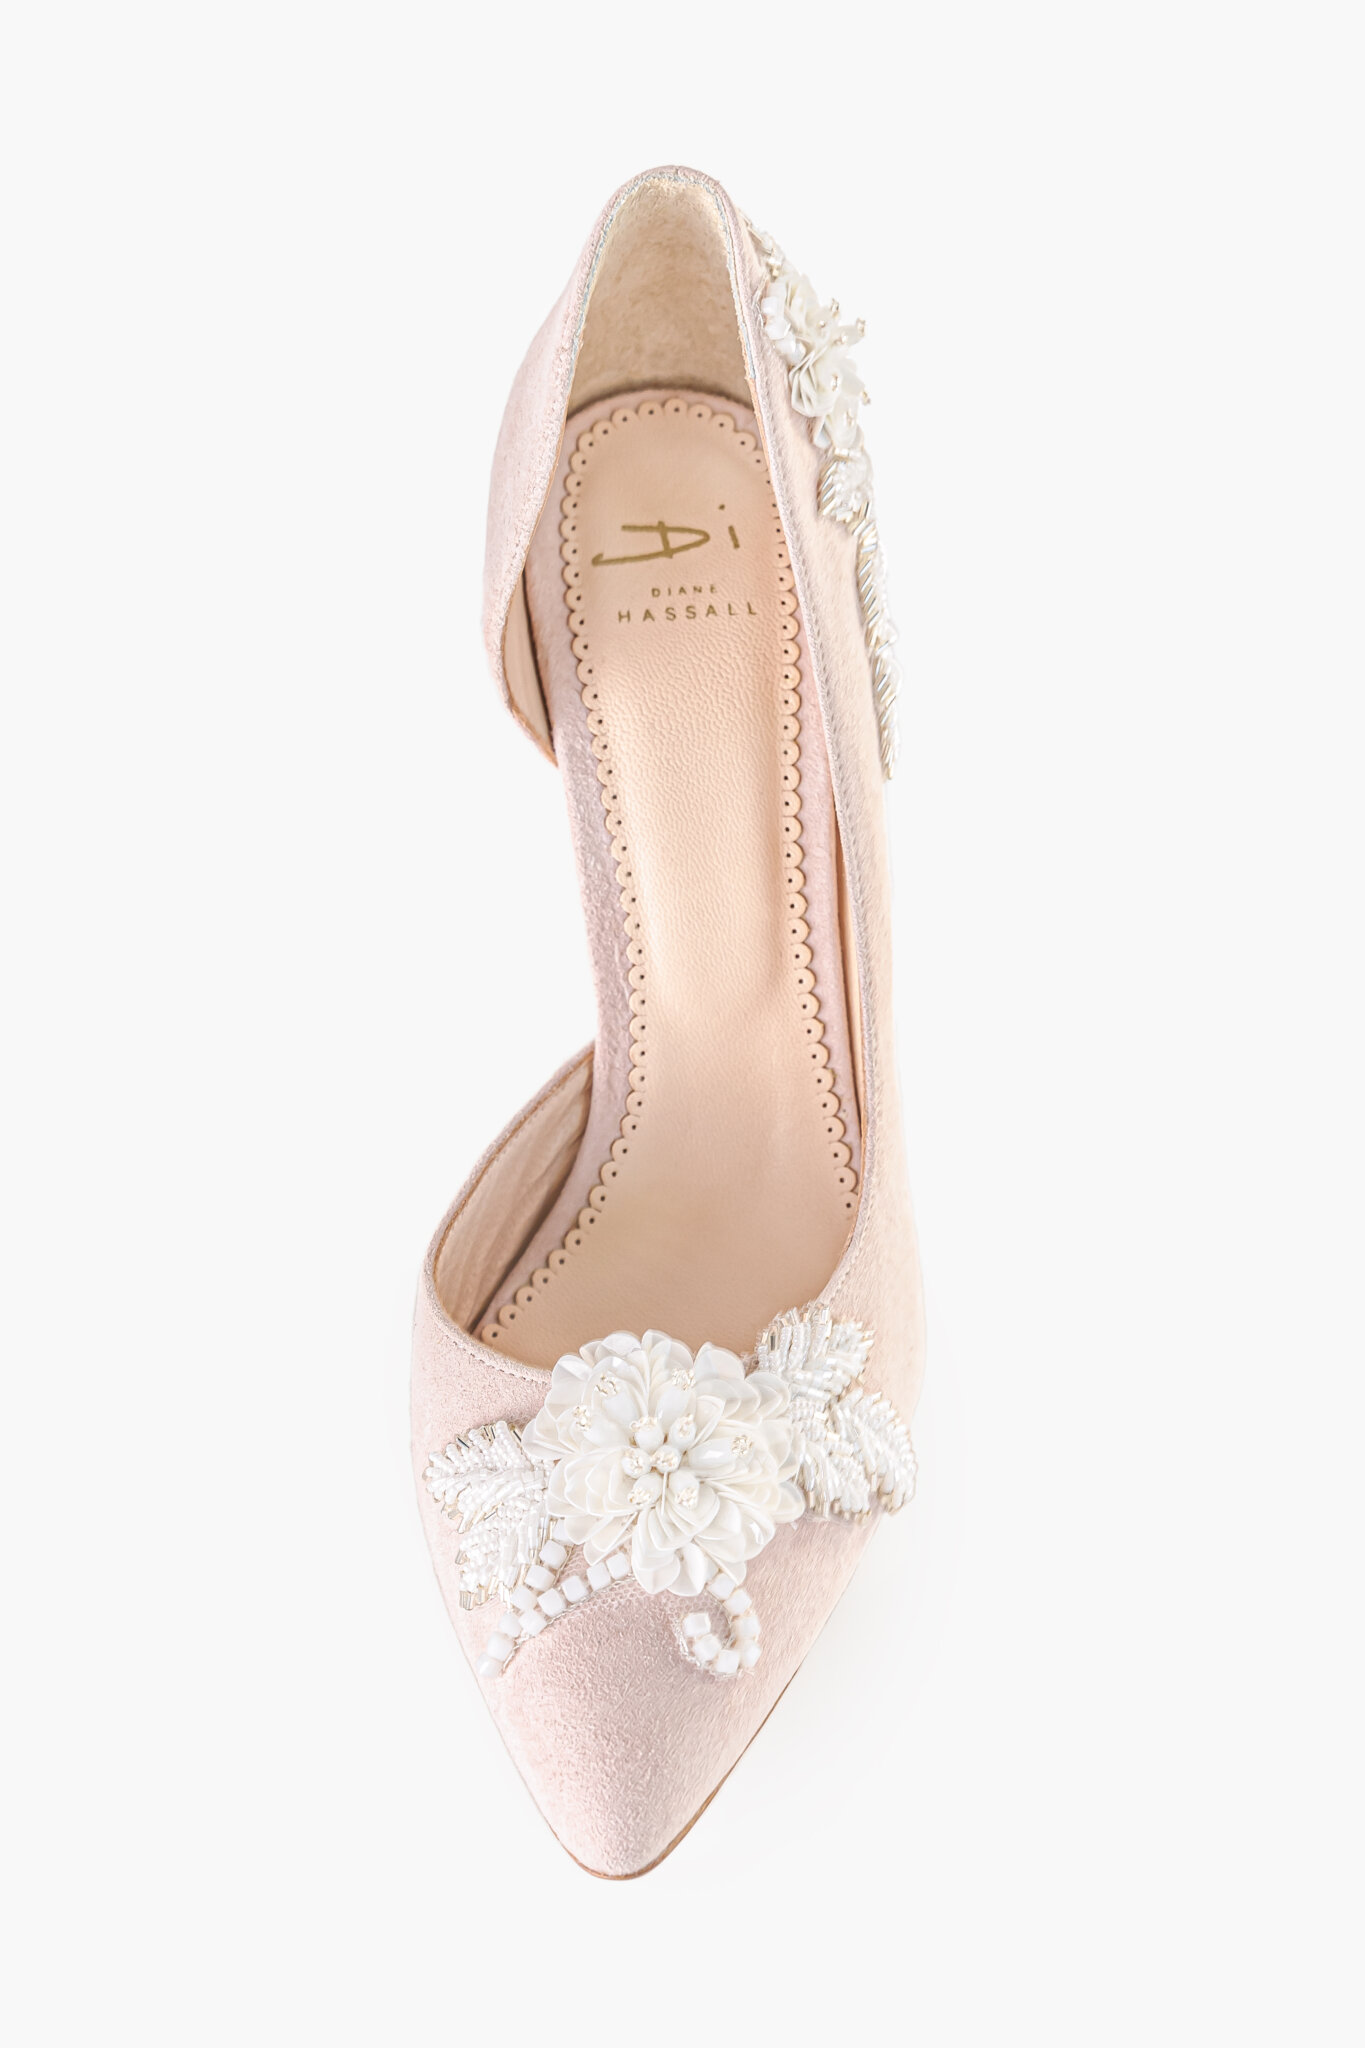 Marry Me Court Shoe • Designer Wedding Shoes • Diane Hassall Wedding Shoes